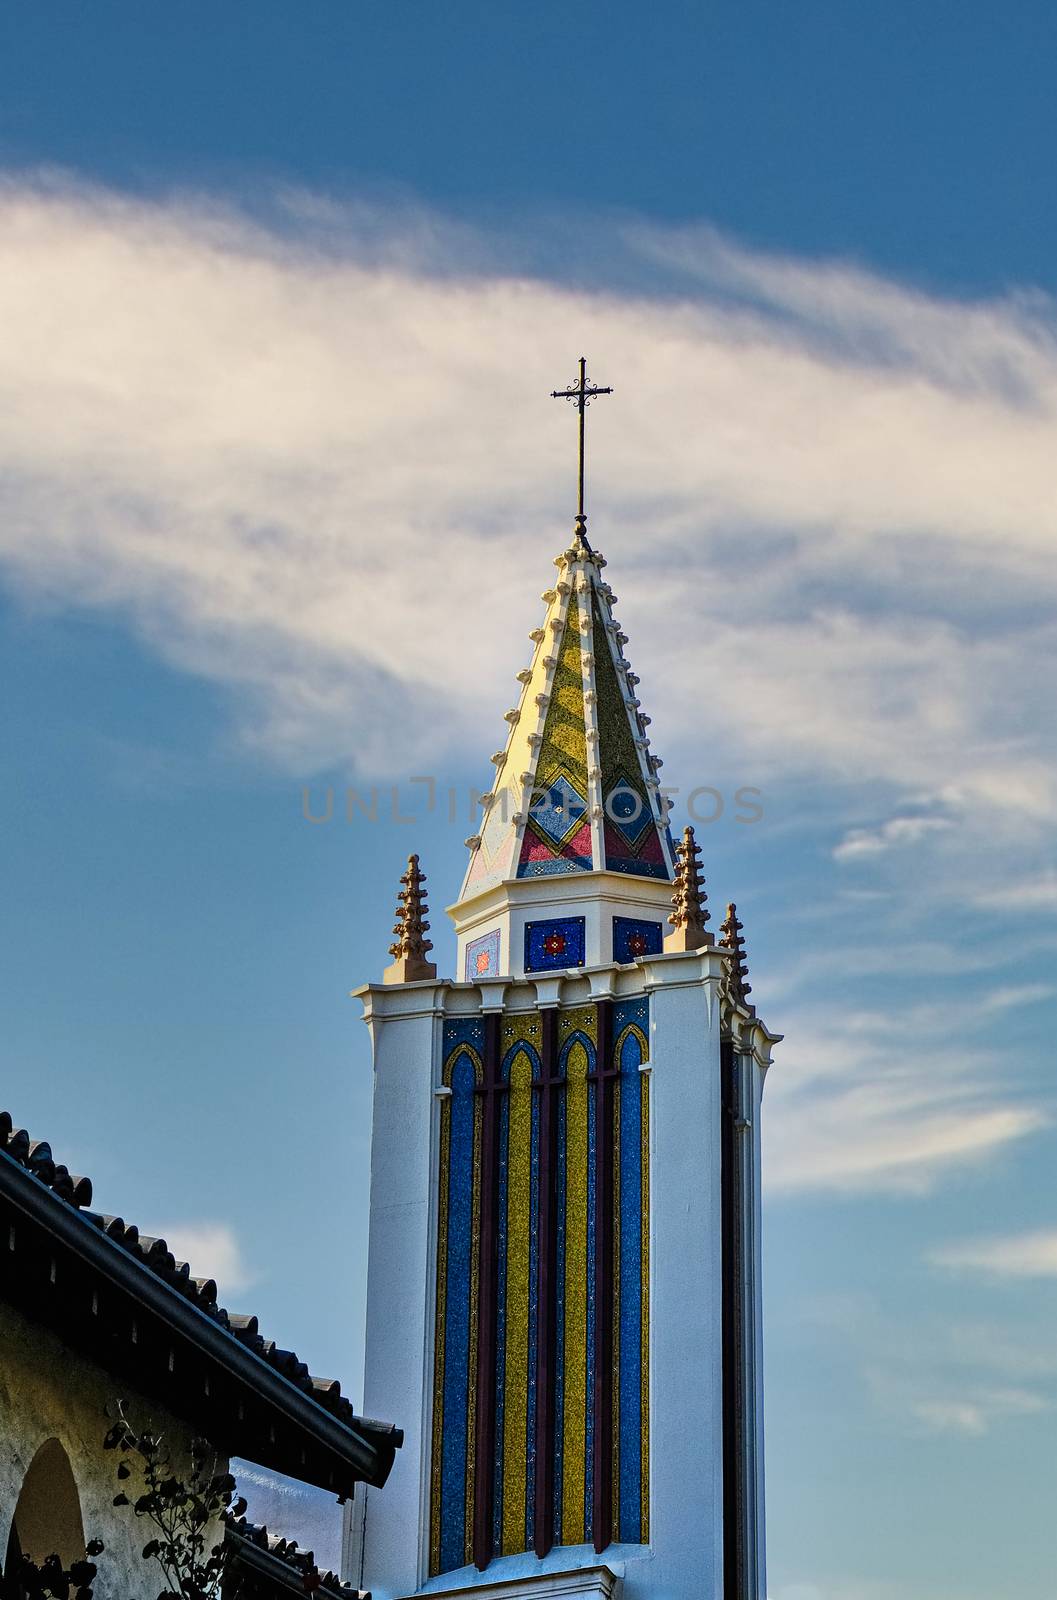 Ornate Steeple on Catholic Church by dbvirago